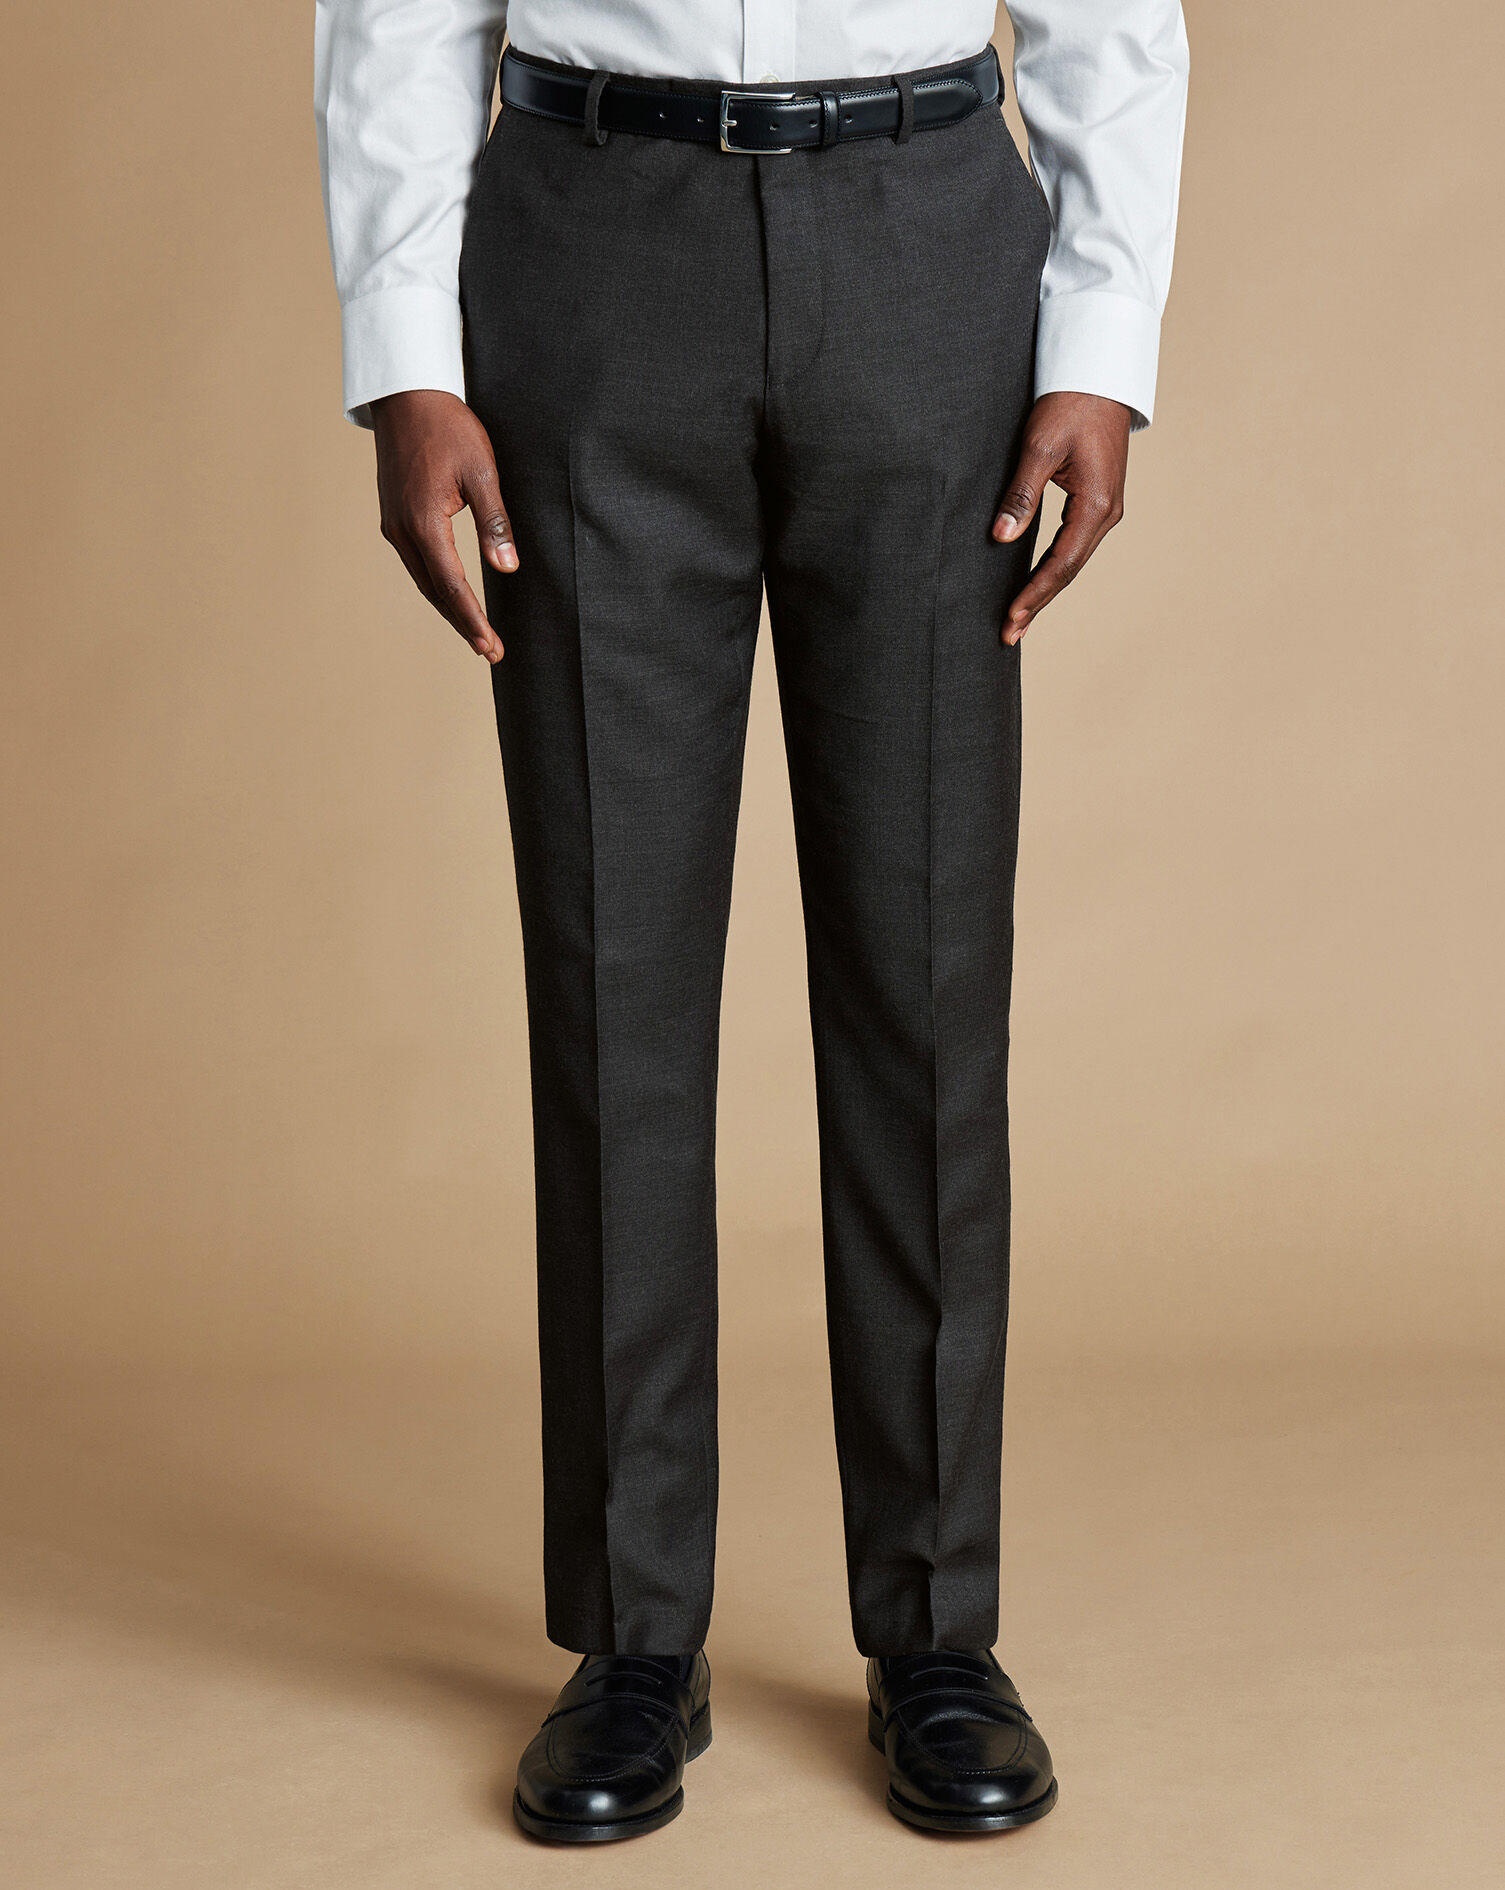 Men elegant trousers | Elegant work uniform